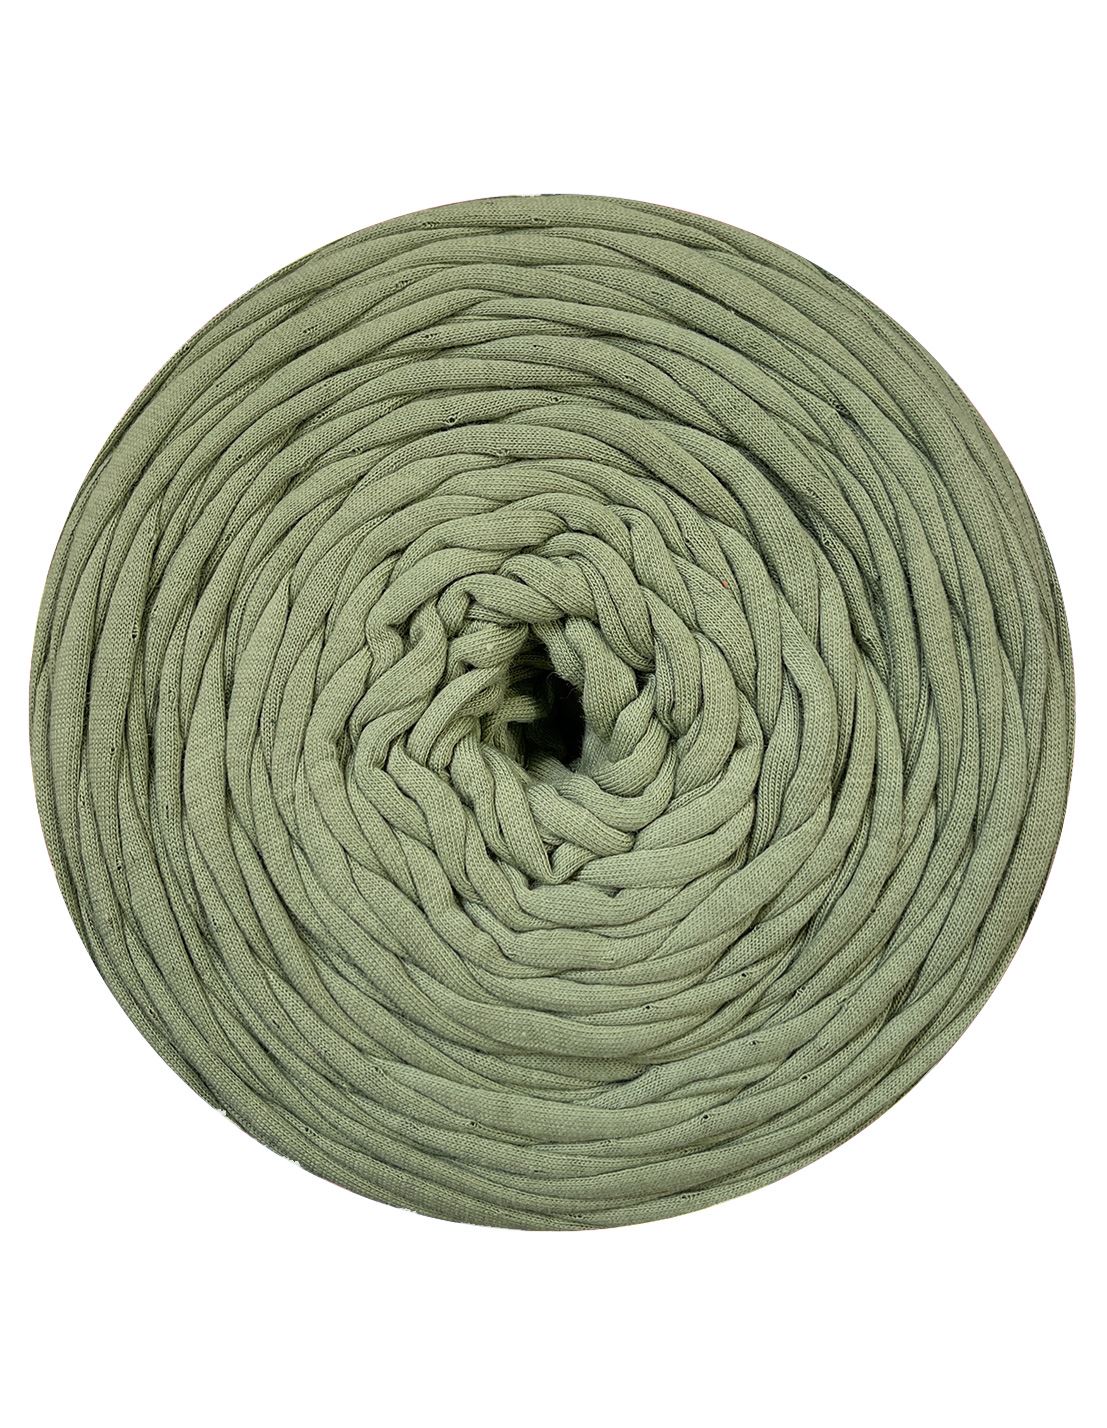 Muted olive green t-shirt yarn by Rescue Yarn (100-120m)